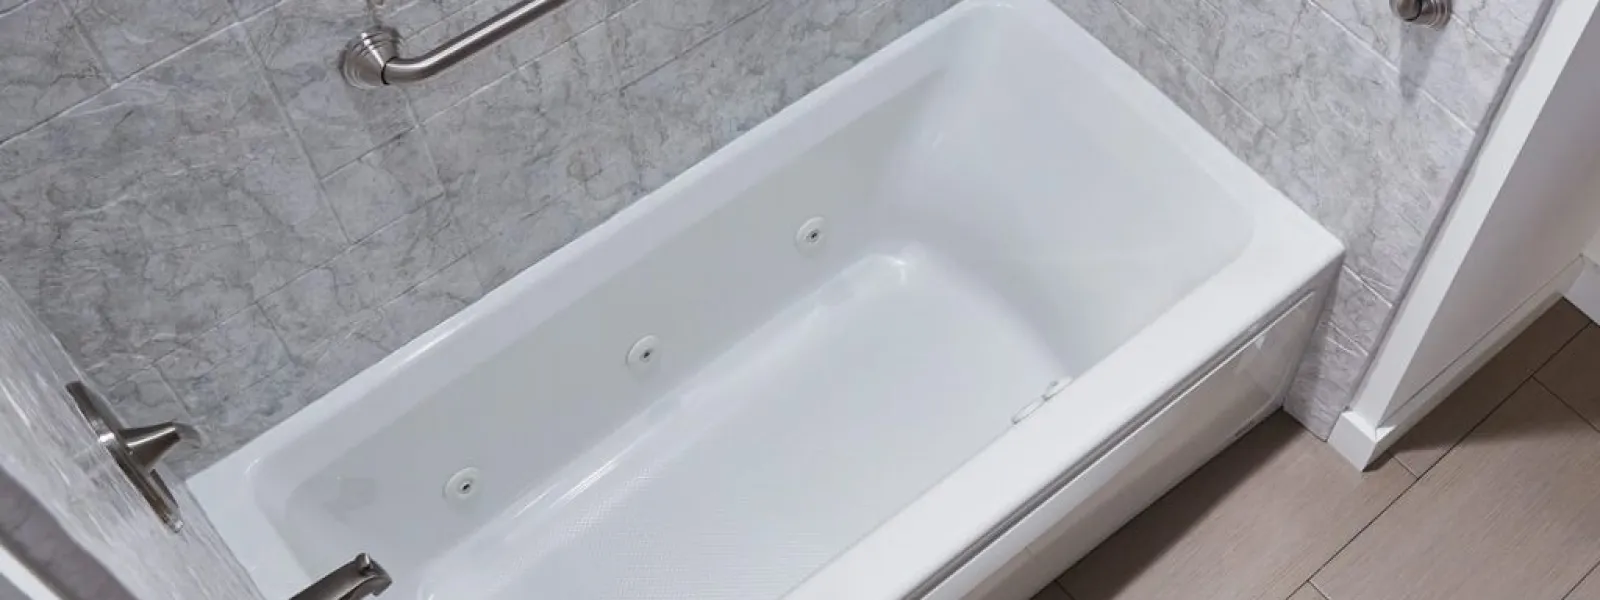 4 Bathtub Upgrades Dallas-Fort Worth Residents Should Consider